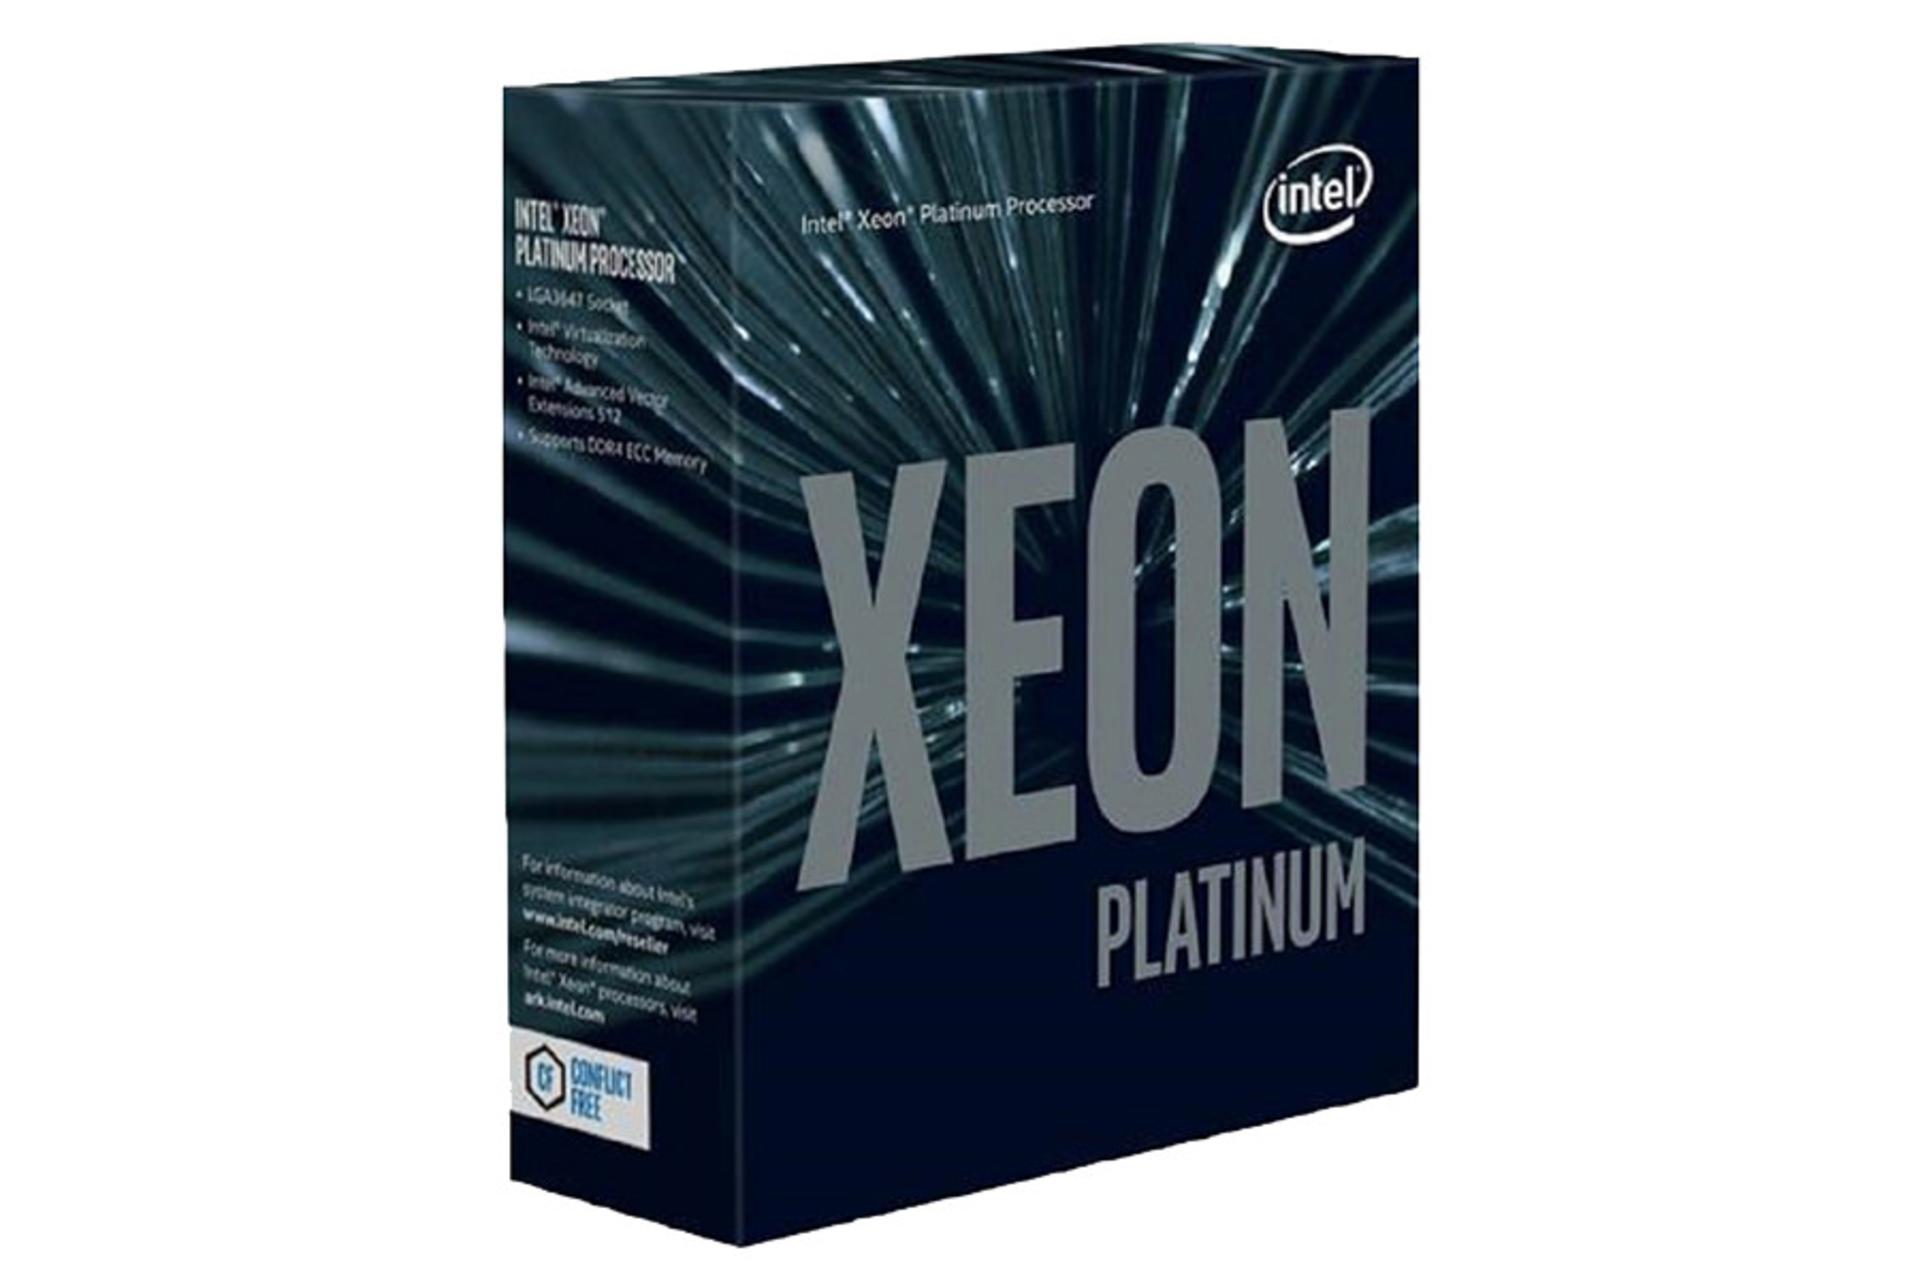 Intel Xeon Platinum P-8136 / اینتل Xeon Platinum P-8136